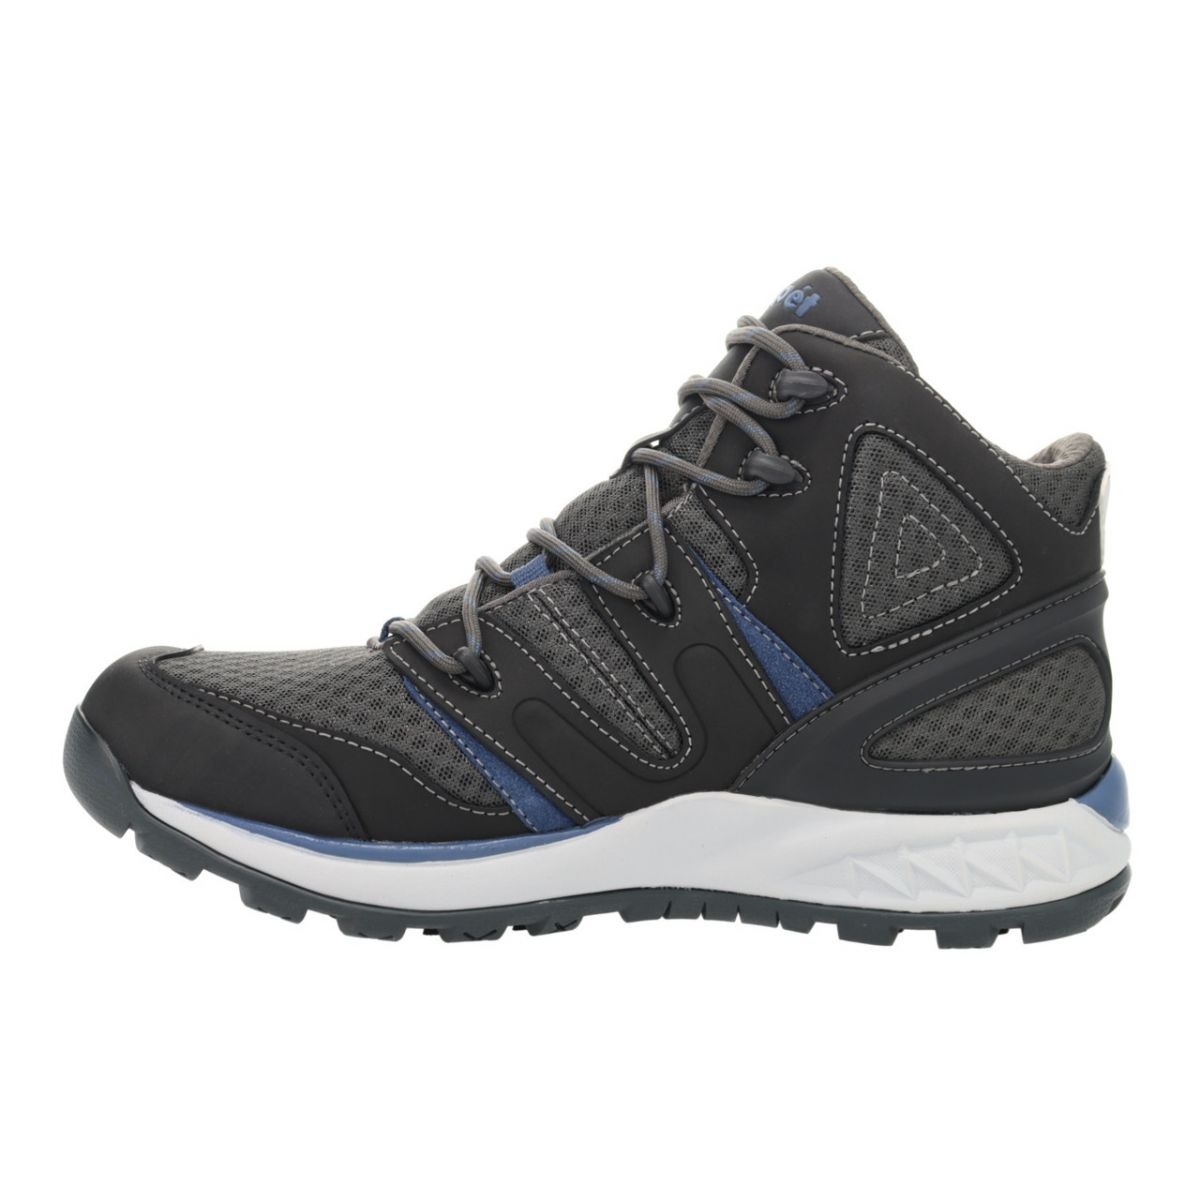 Propet Men's Veymont Waterproof Hiking Boot Grey/Blue - MOA022SGRB GREY/BLUE - GREY/BLUE, 8.5 X-Wide